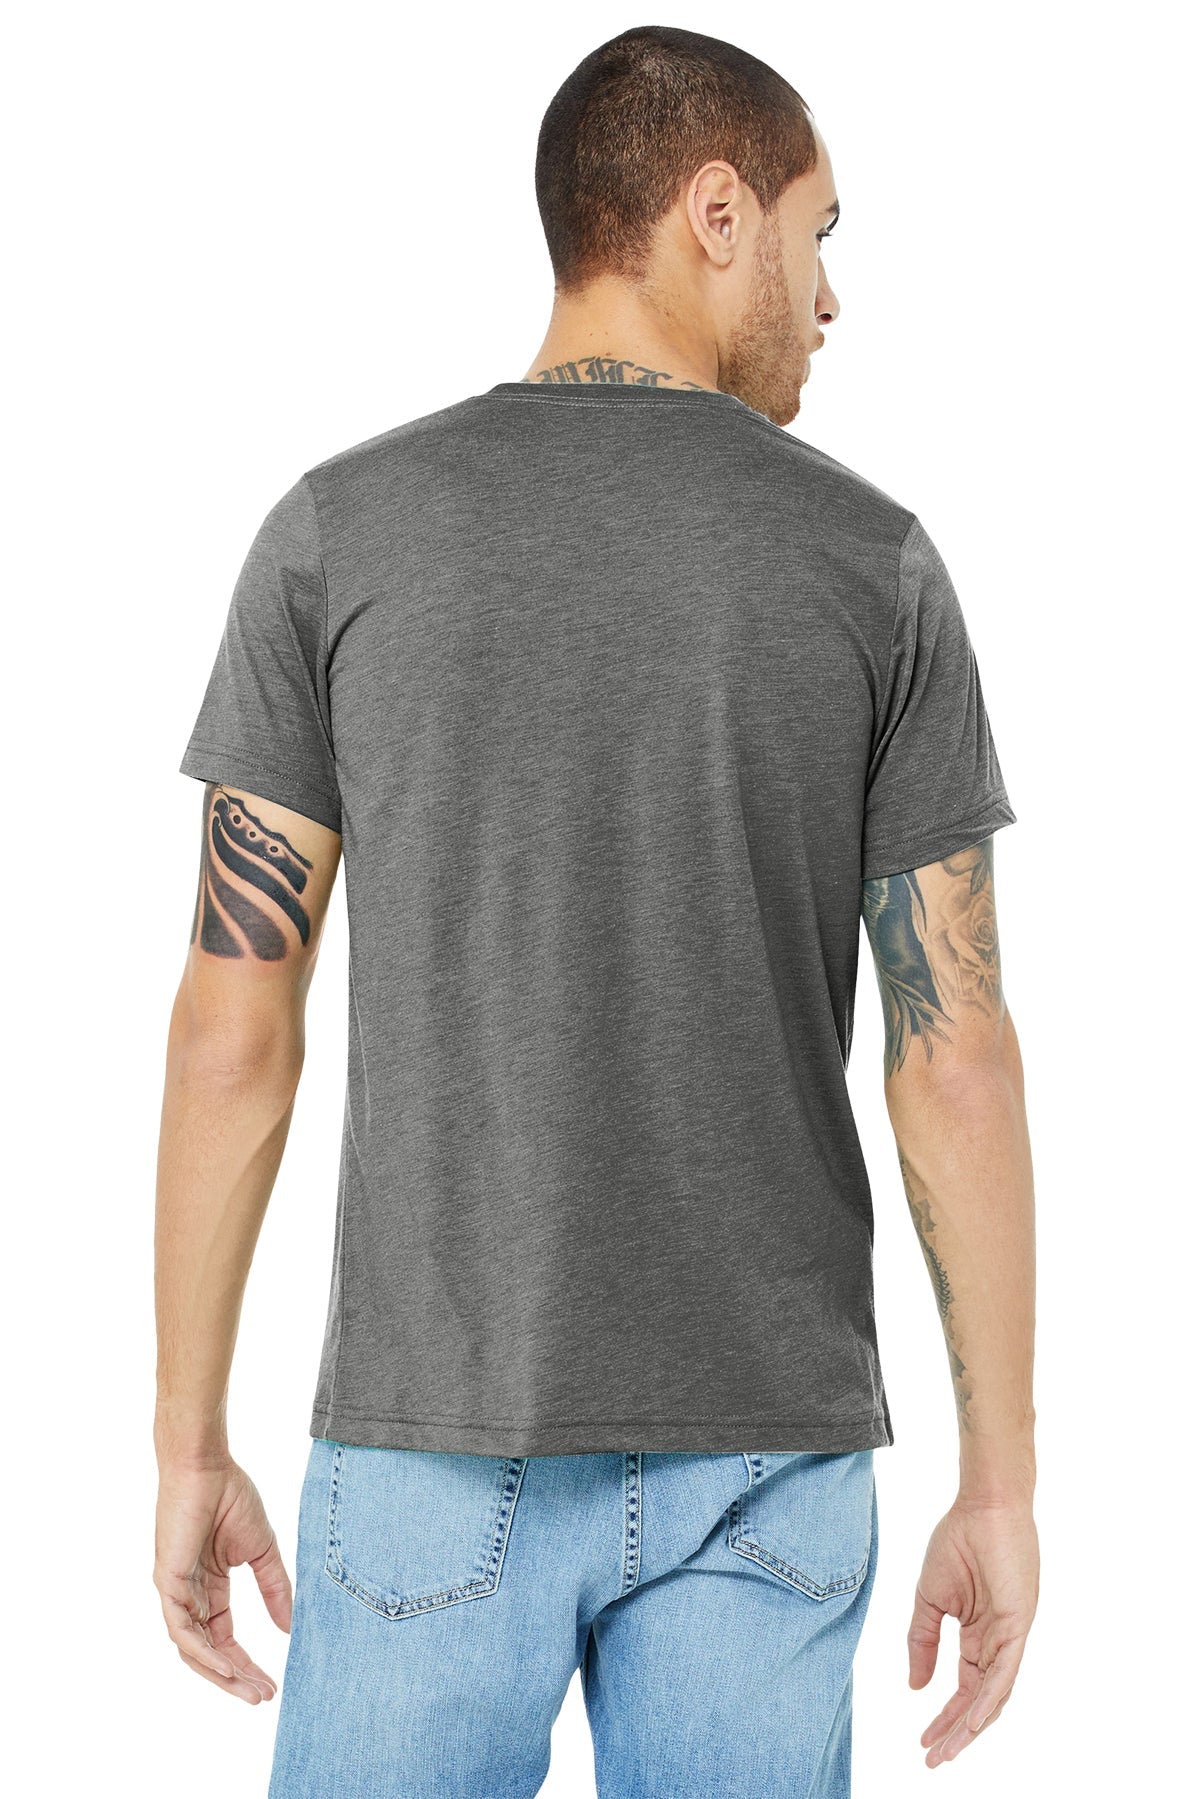 bella canvas unisex triblend short sleeve t shirt 3413c grey triblend